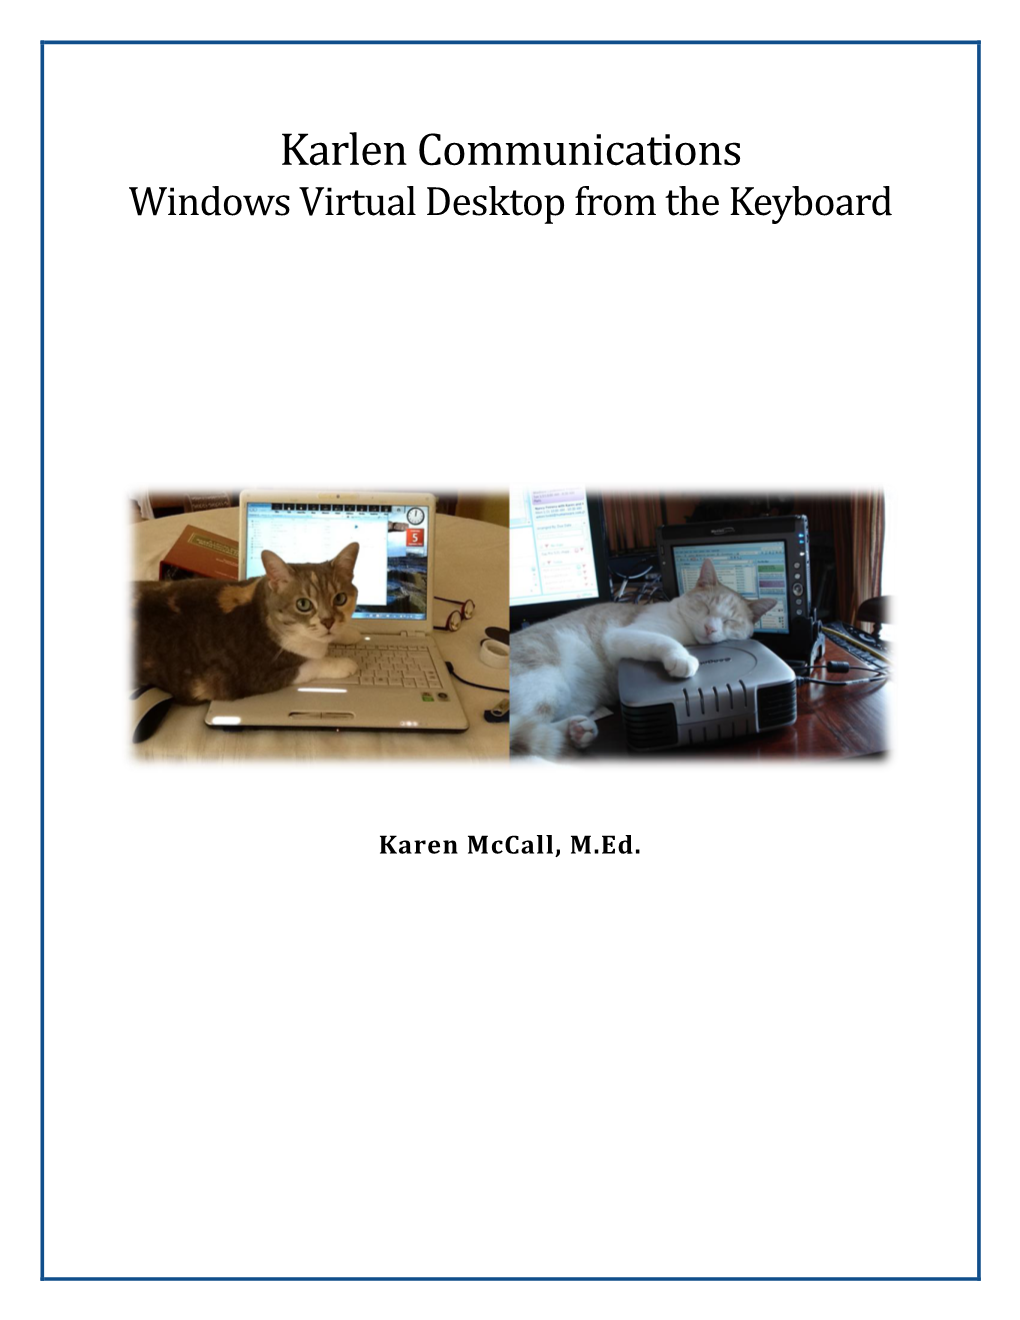 Windows 10 Virtual Desktop from the Keyboard